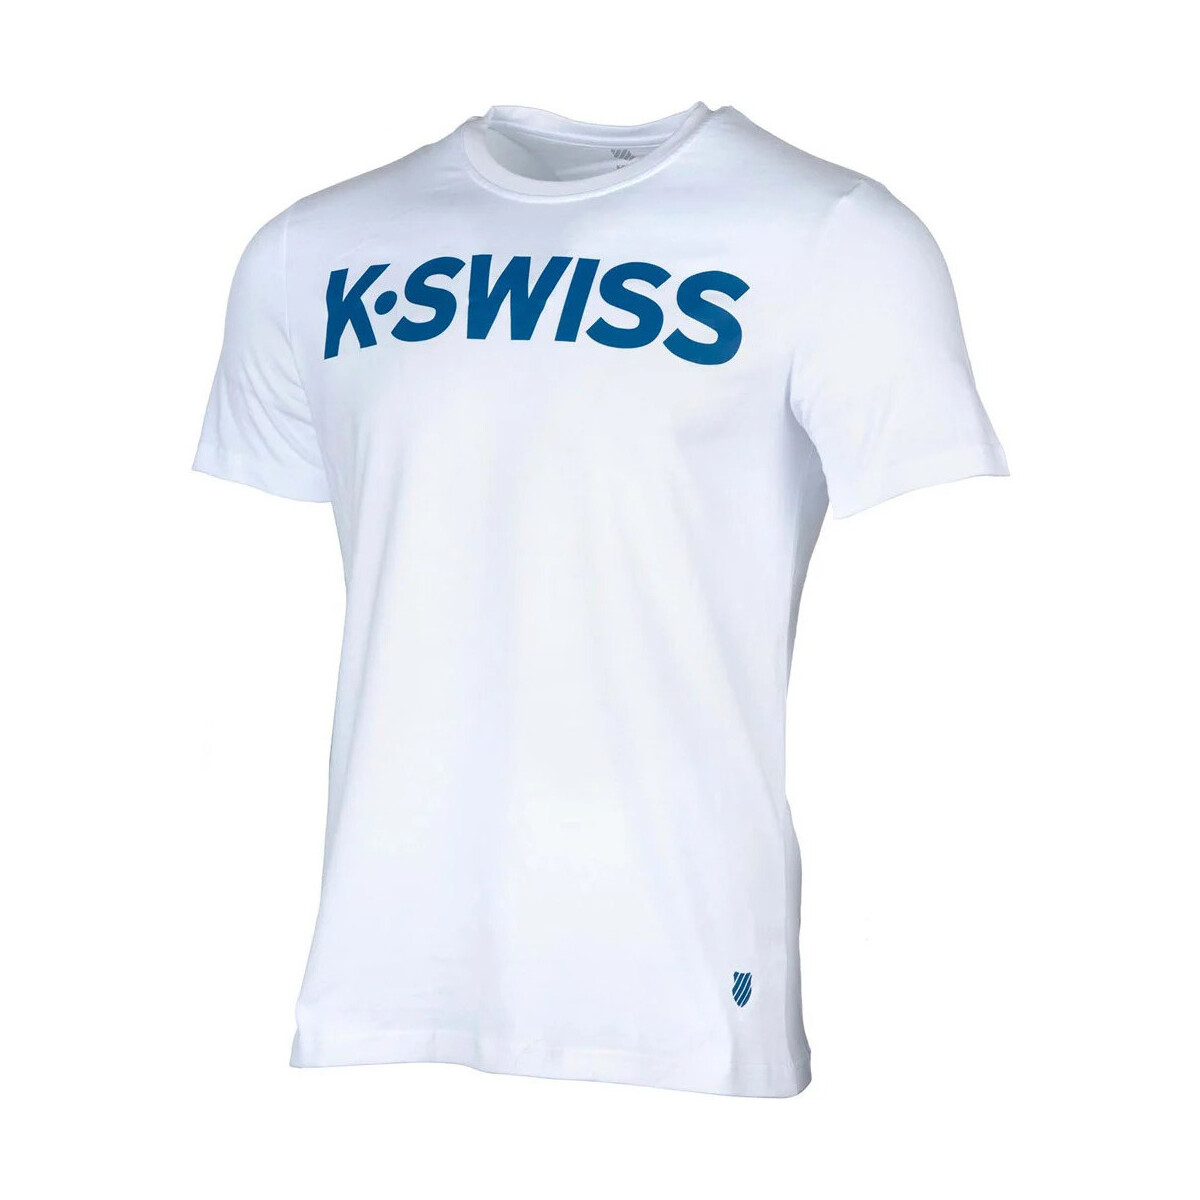 textil Hombre Camisetas manga corta K-Swiss CAMISETA LOGO Blanco